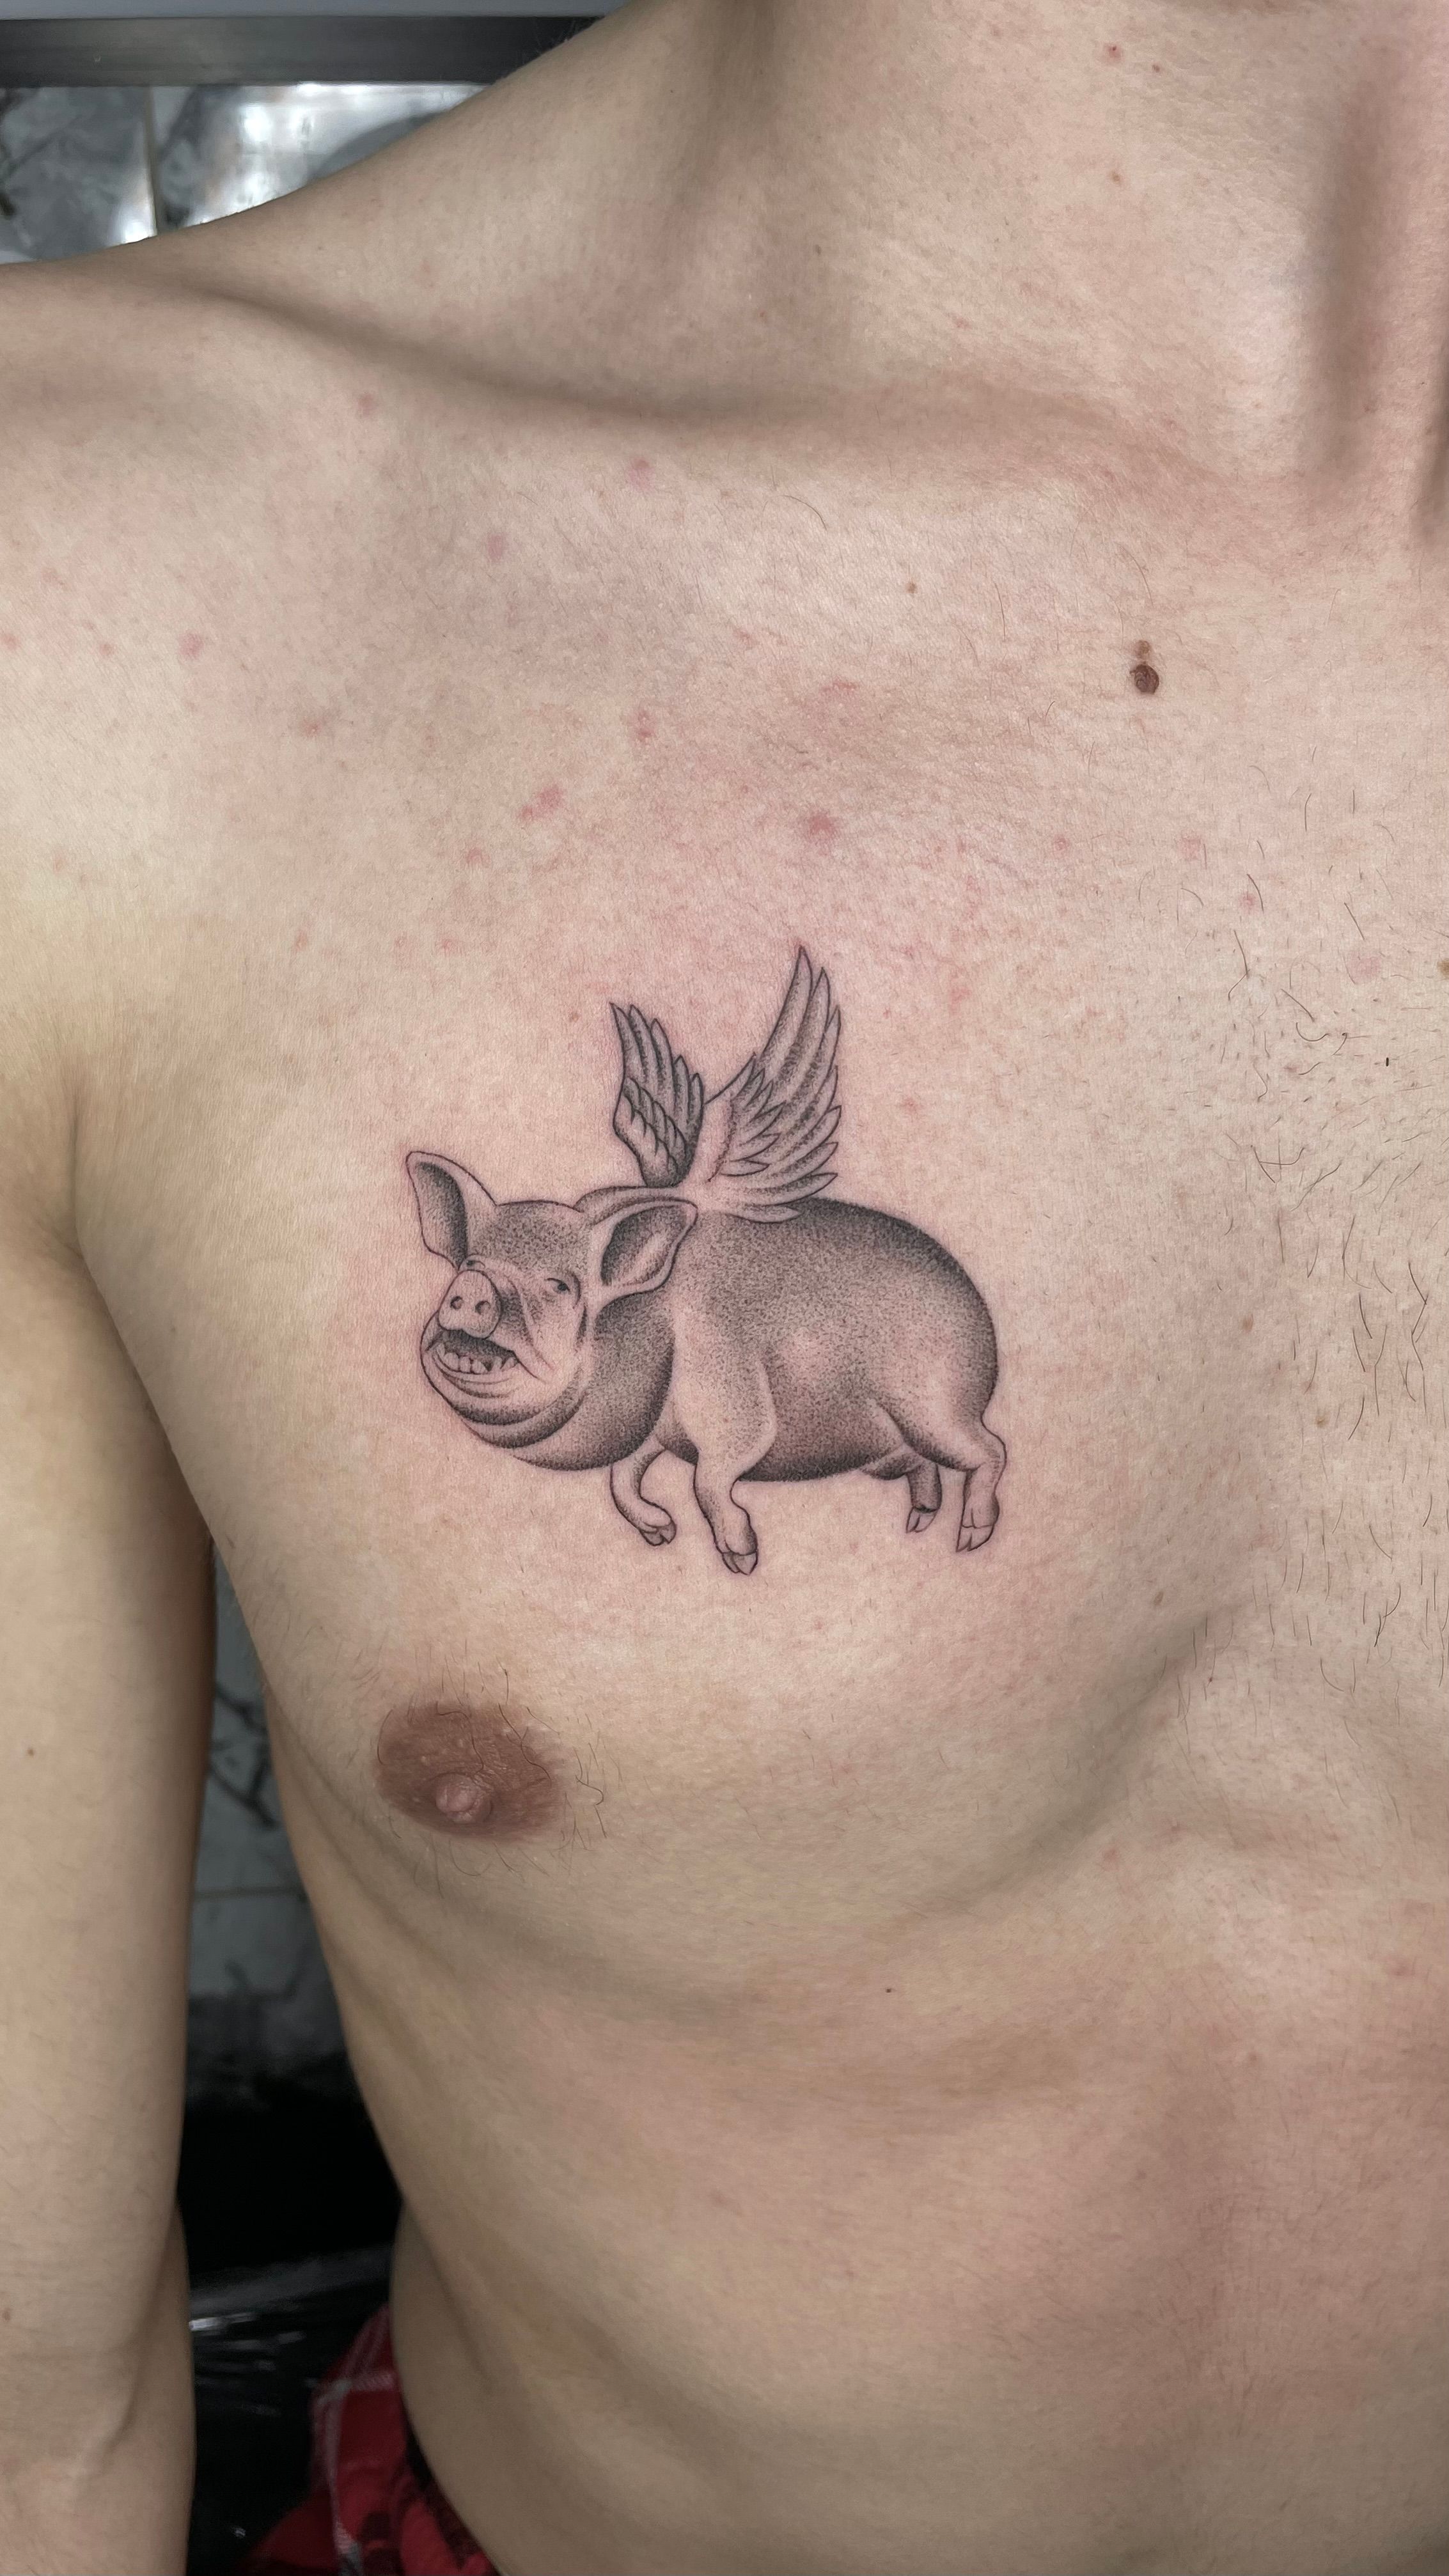 Tattoo Nerd: Using Pig Skin to Practice Tattooing